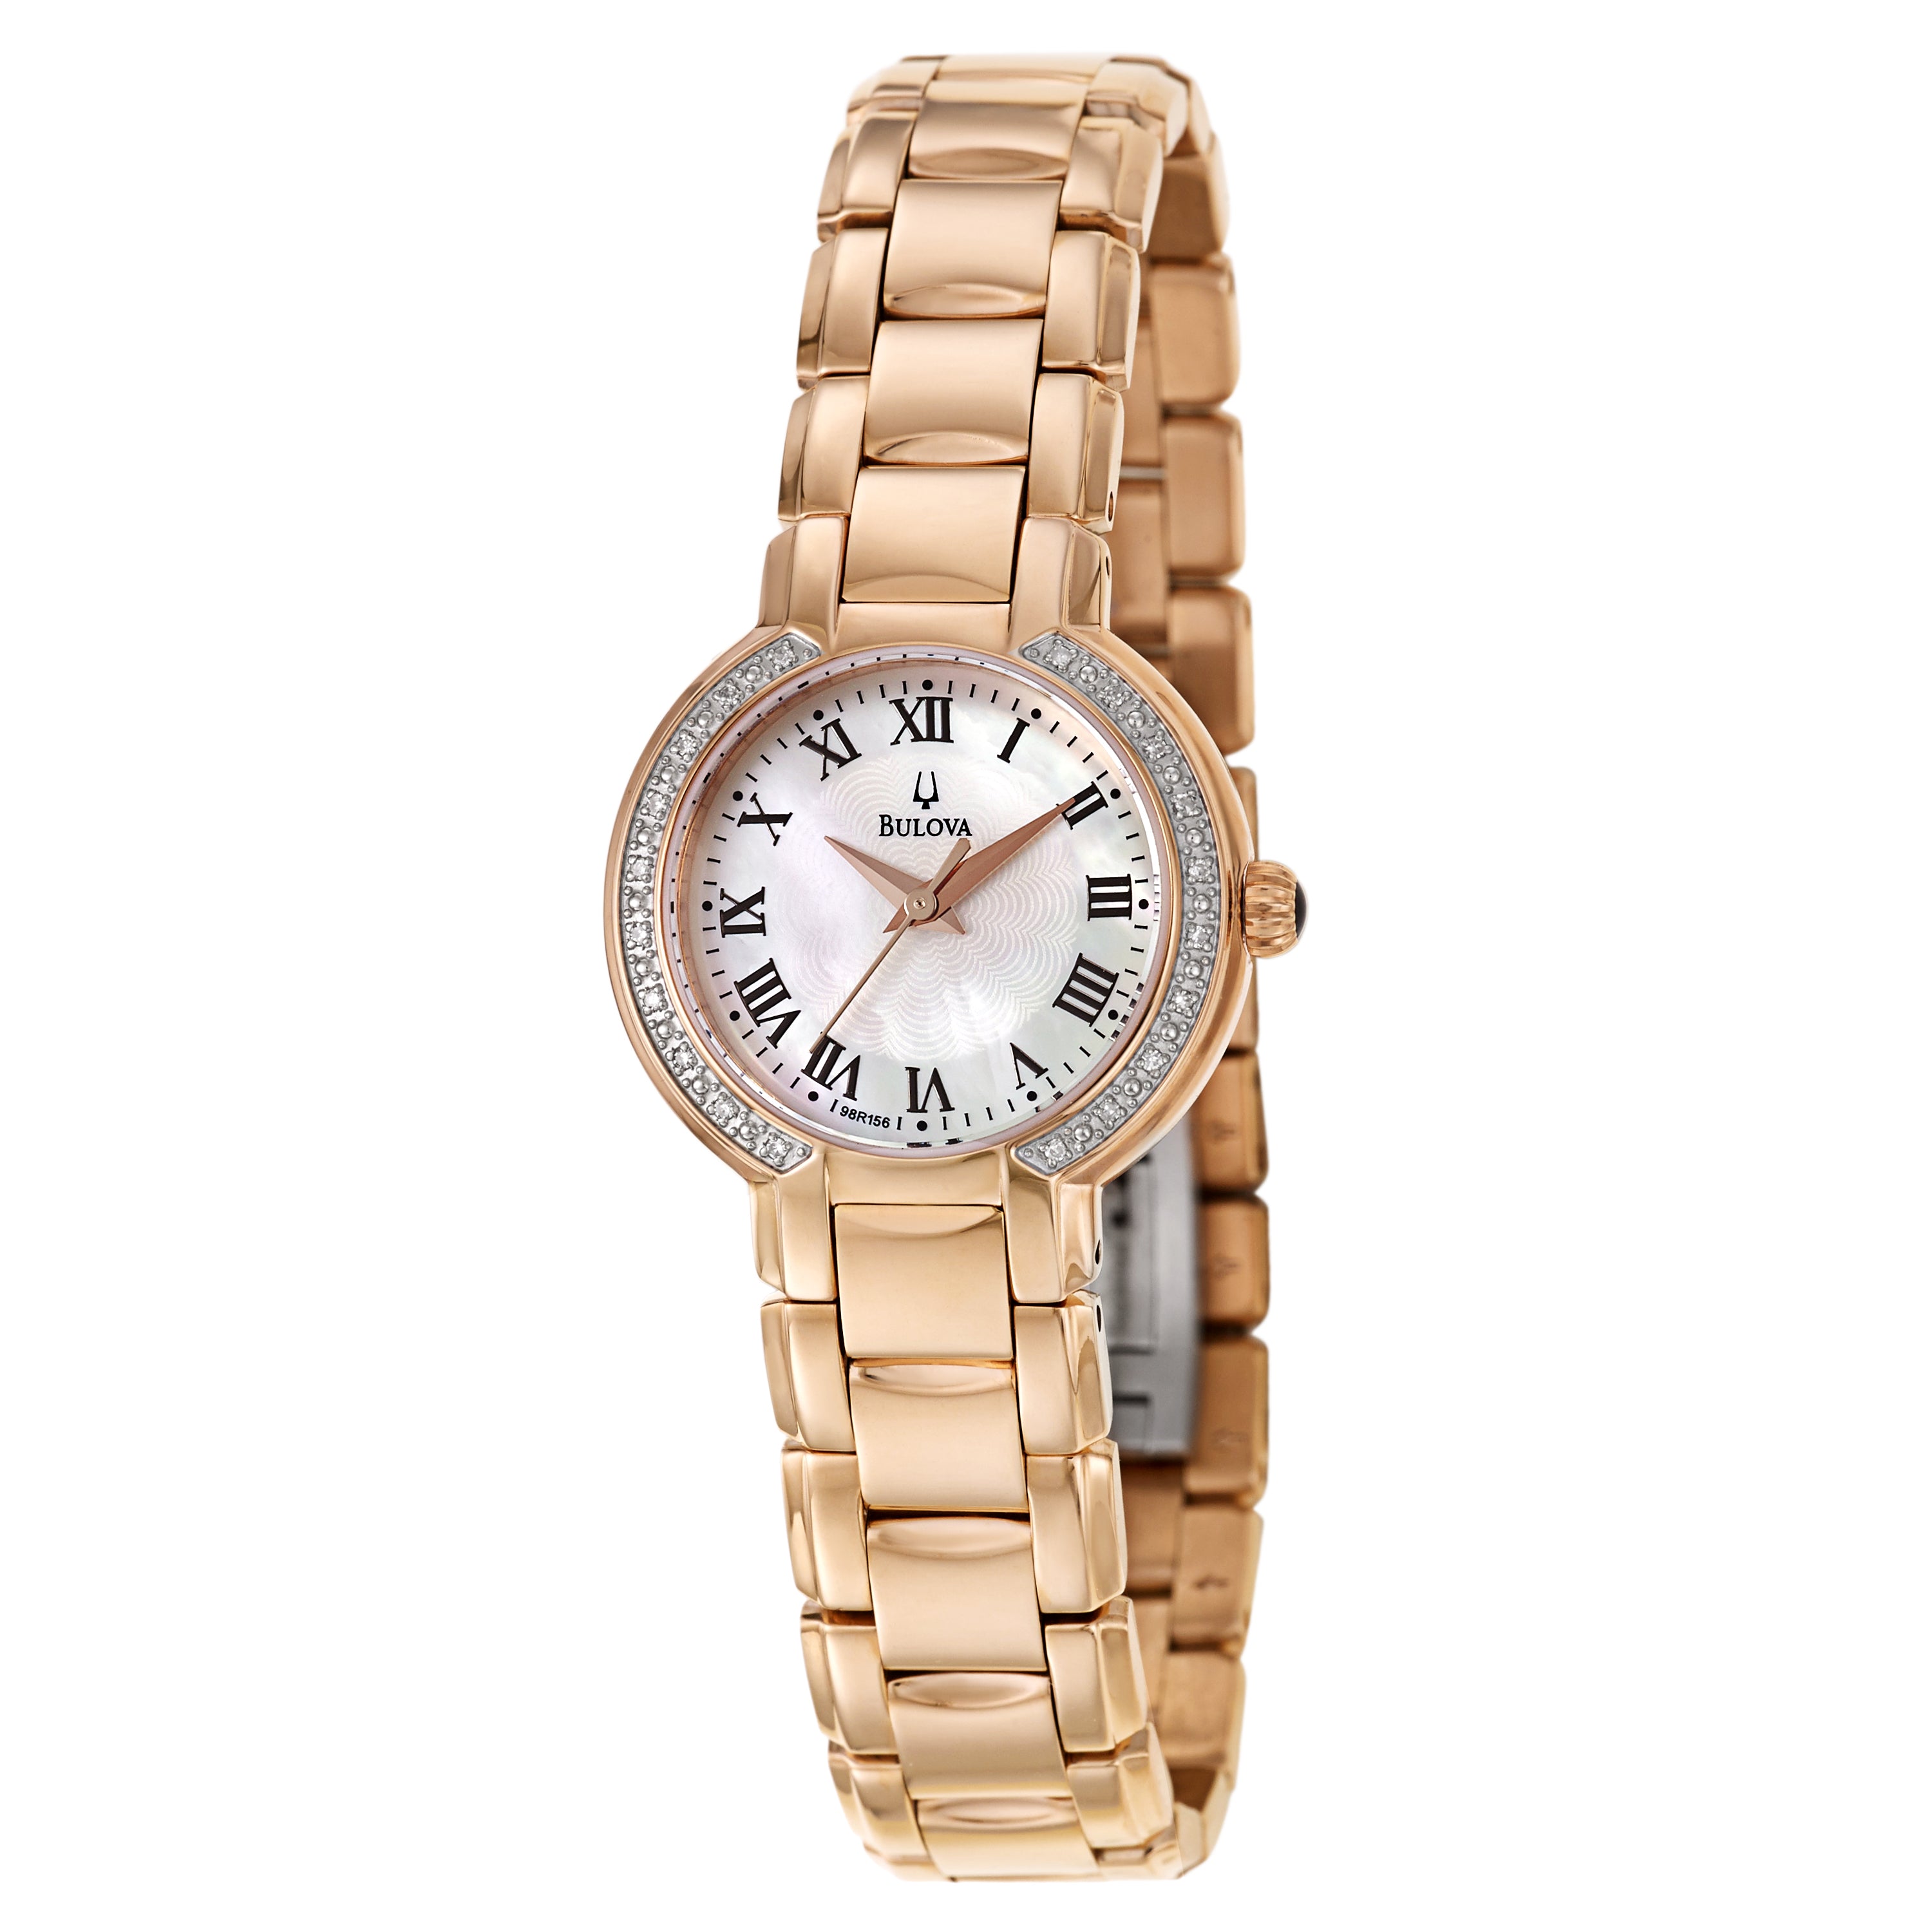 title:Bulova Women's 98R156 Fairlawn 27mm Quartz Watch;color:Rose Gold